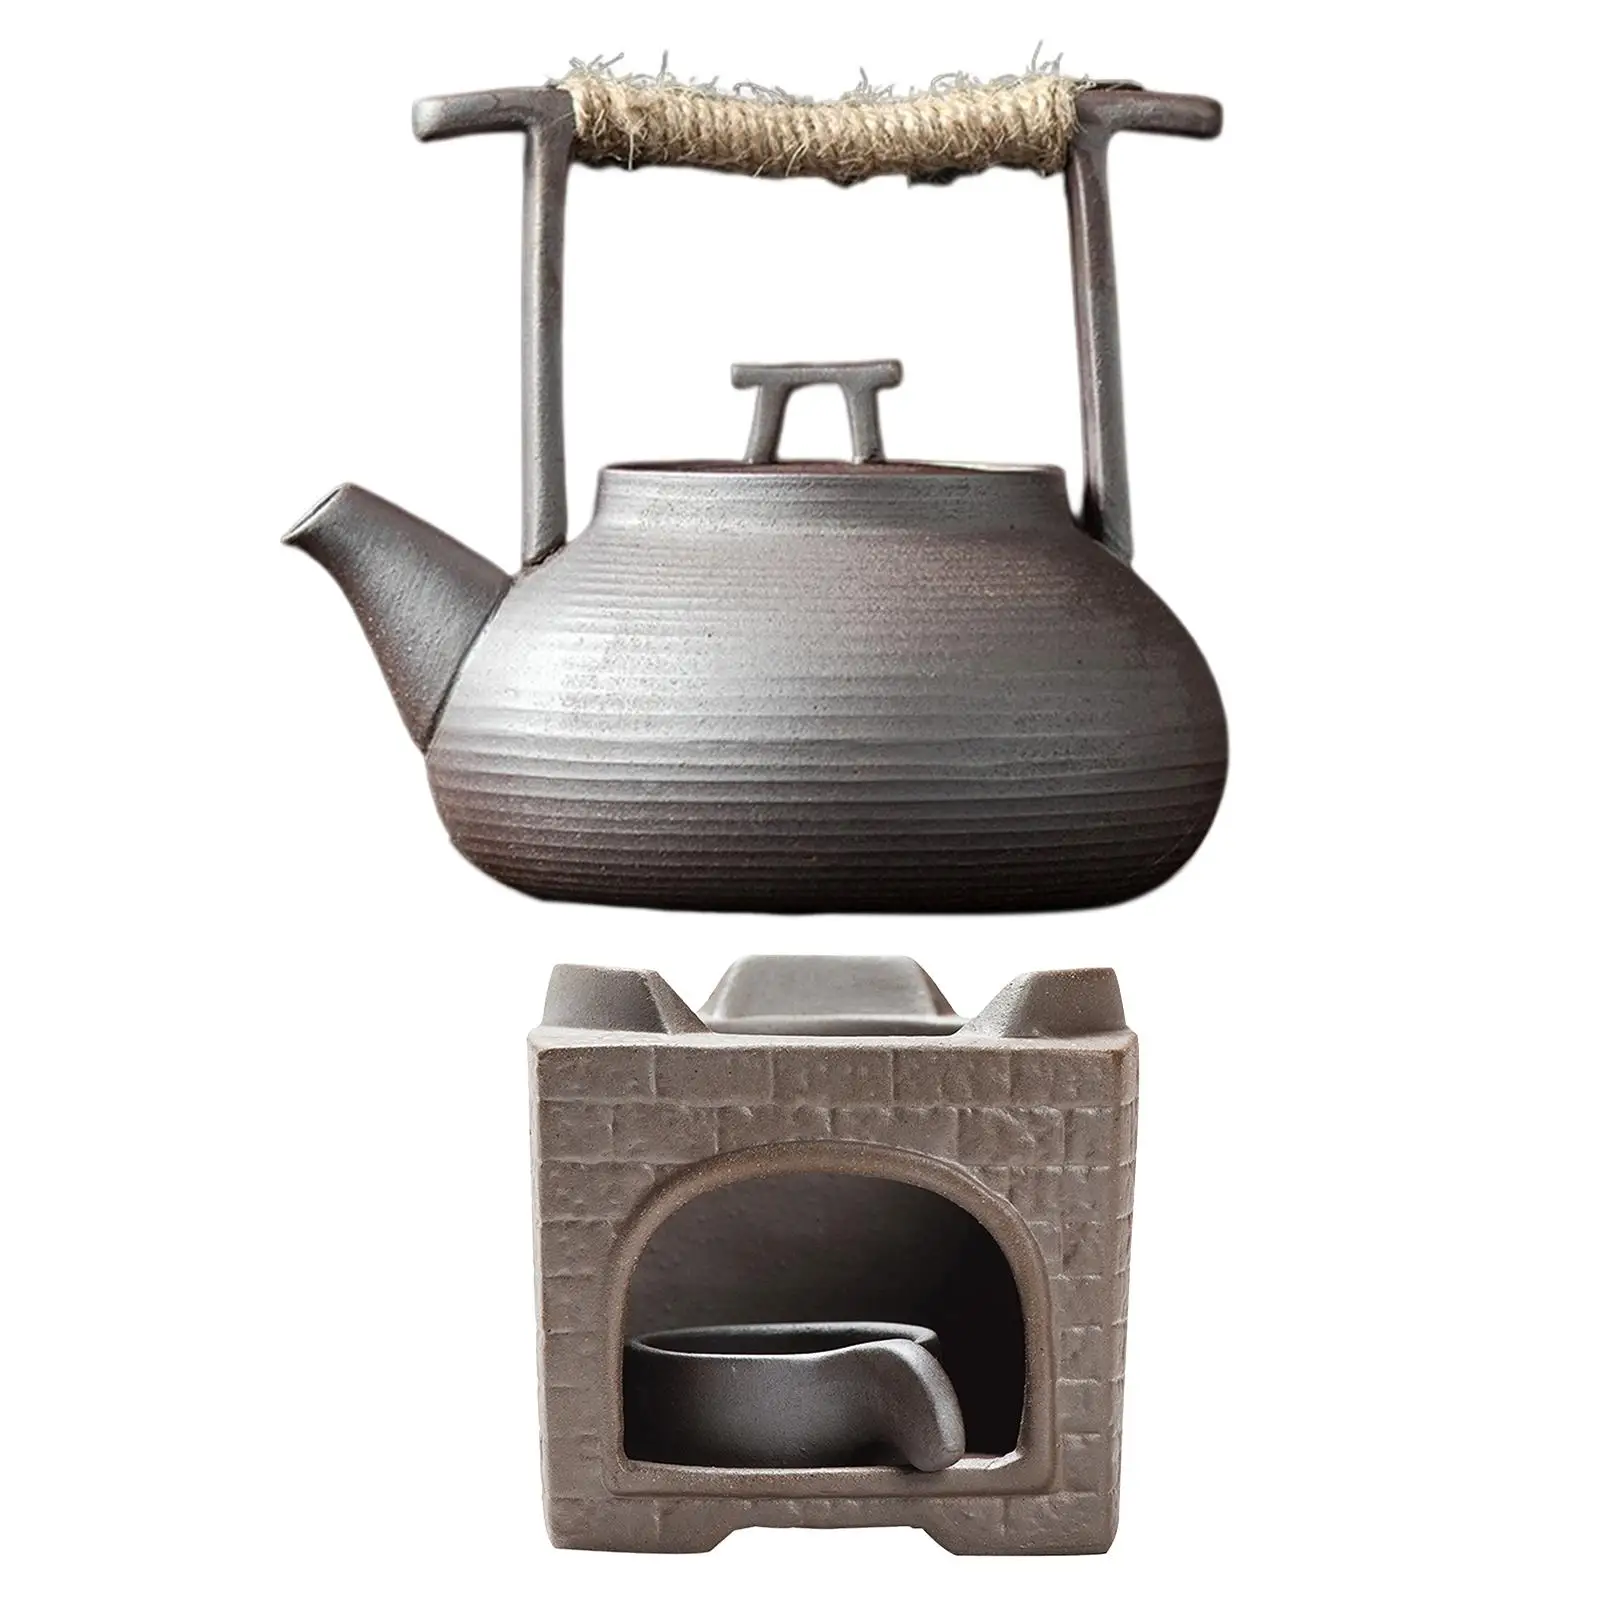 Ceramic Tea Kettle Water Kettle Tea Pot Ergonomic Handle Handmade Teapot Warmer for Home Kitchen Teahouse Dining Room Picnic